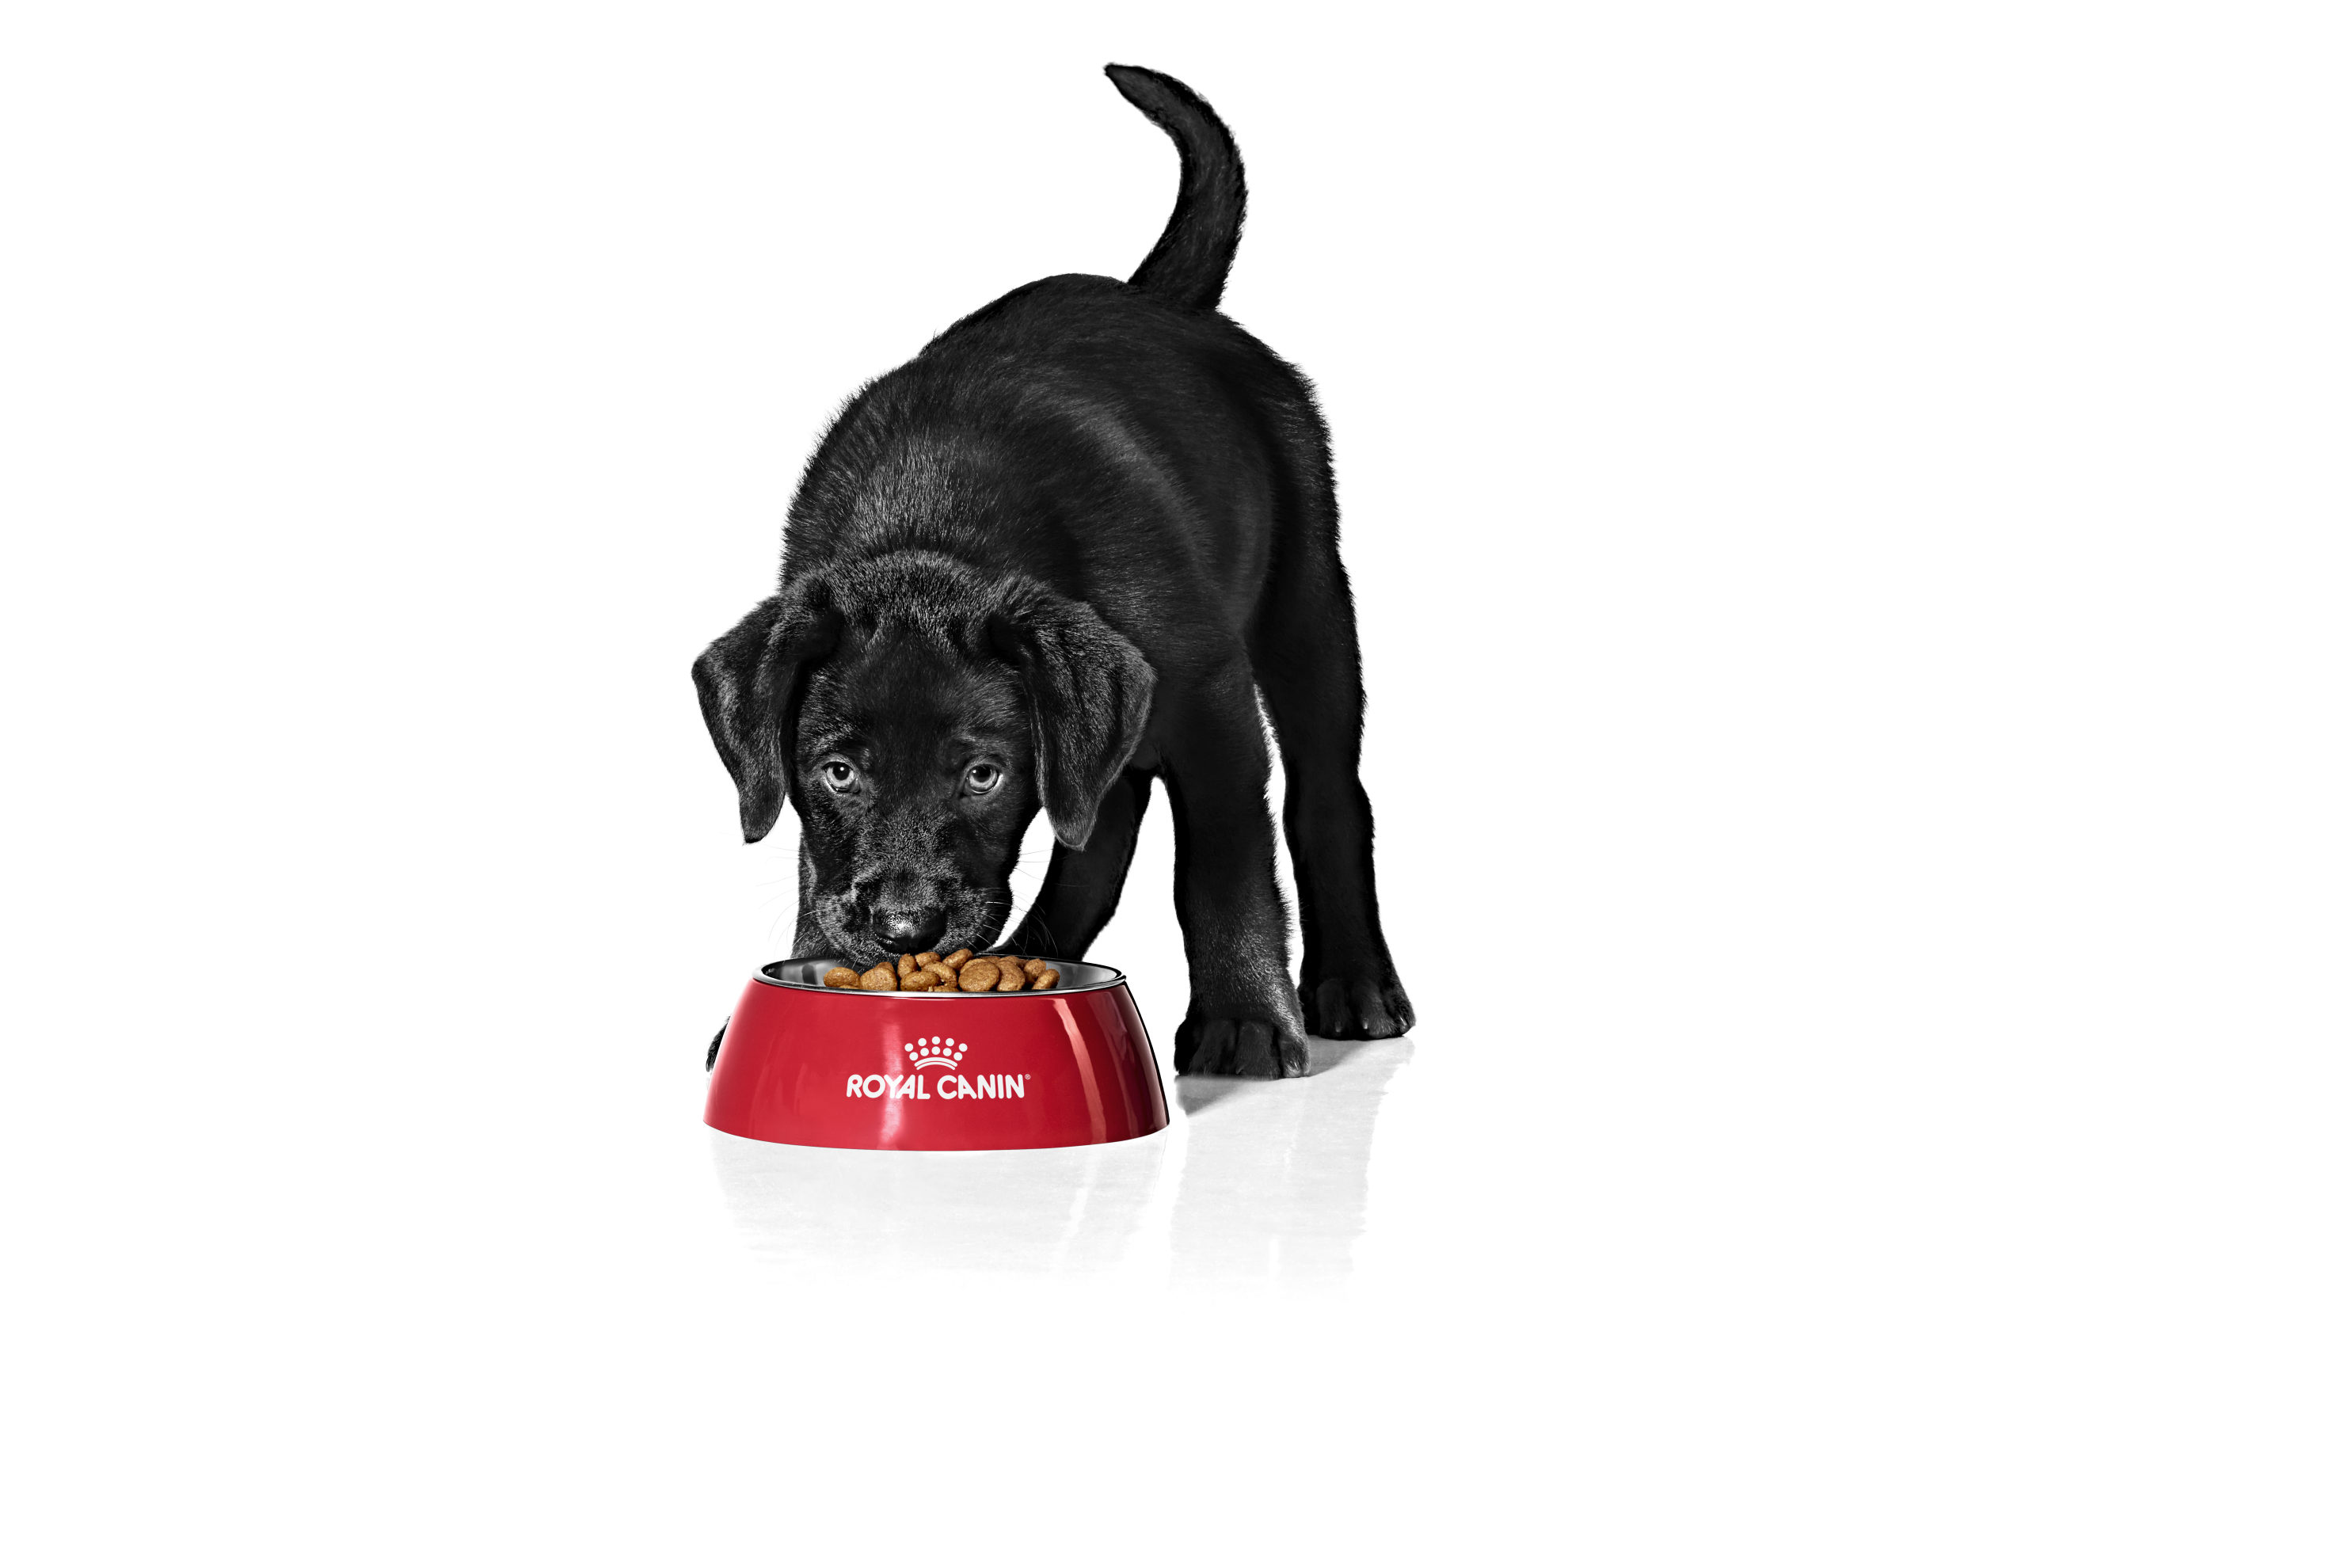 Labrador Retriever cachorro negro comiendo de un tazón rojo